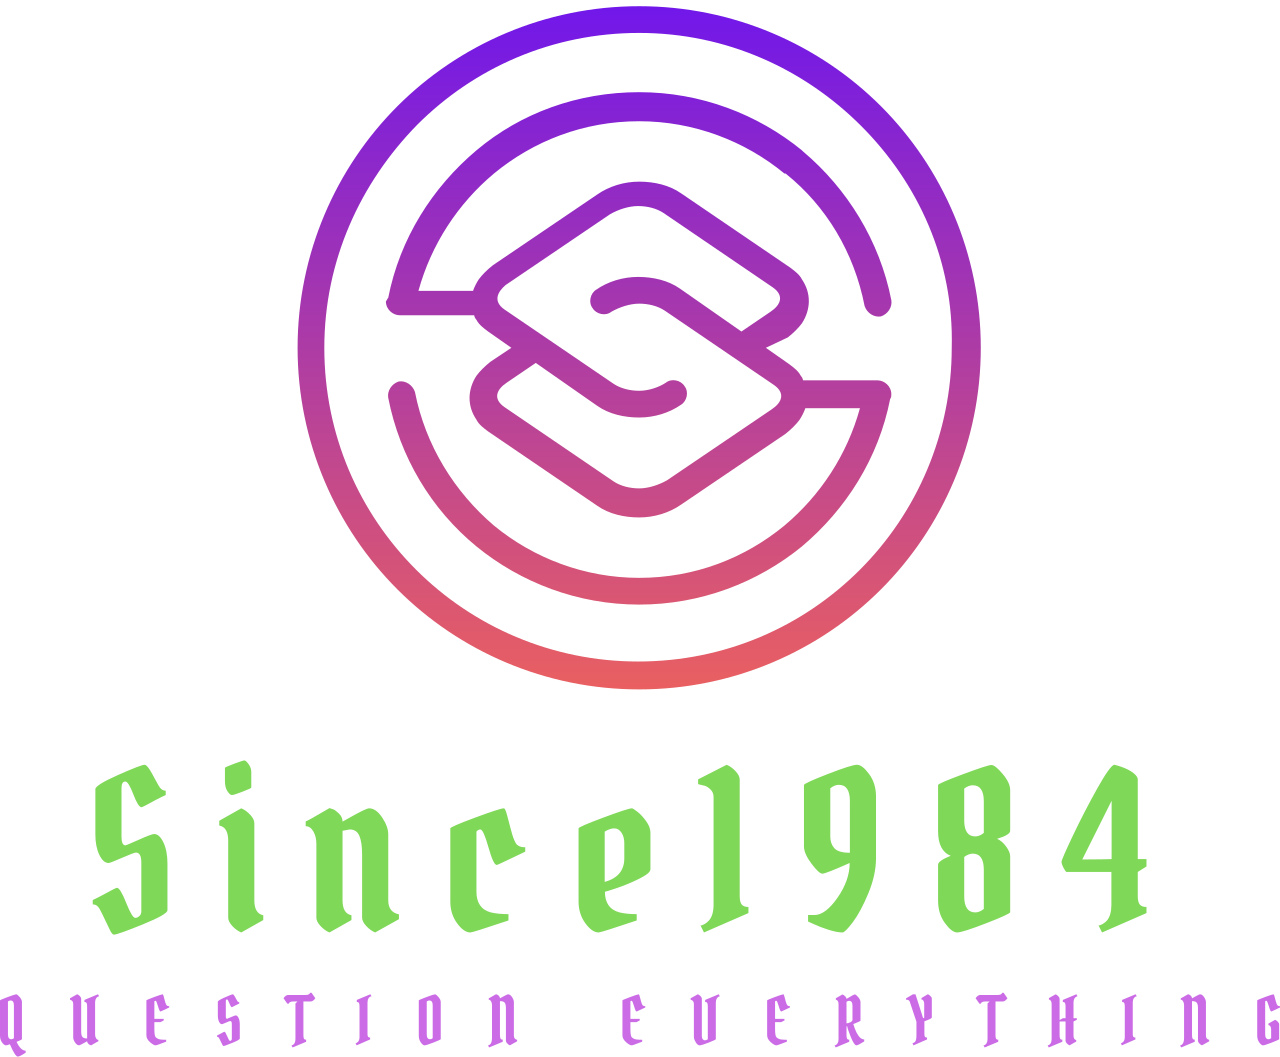 Since1984 's logo